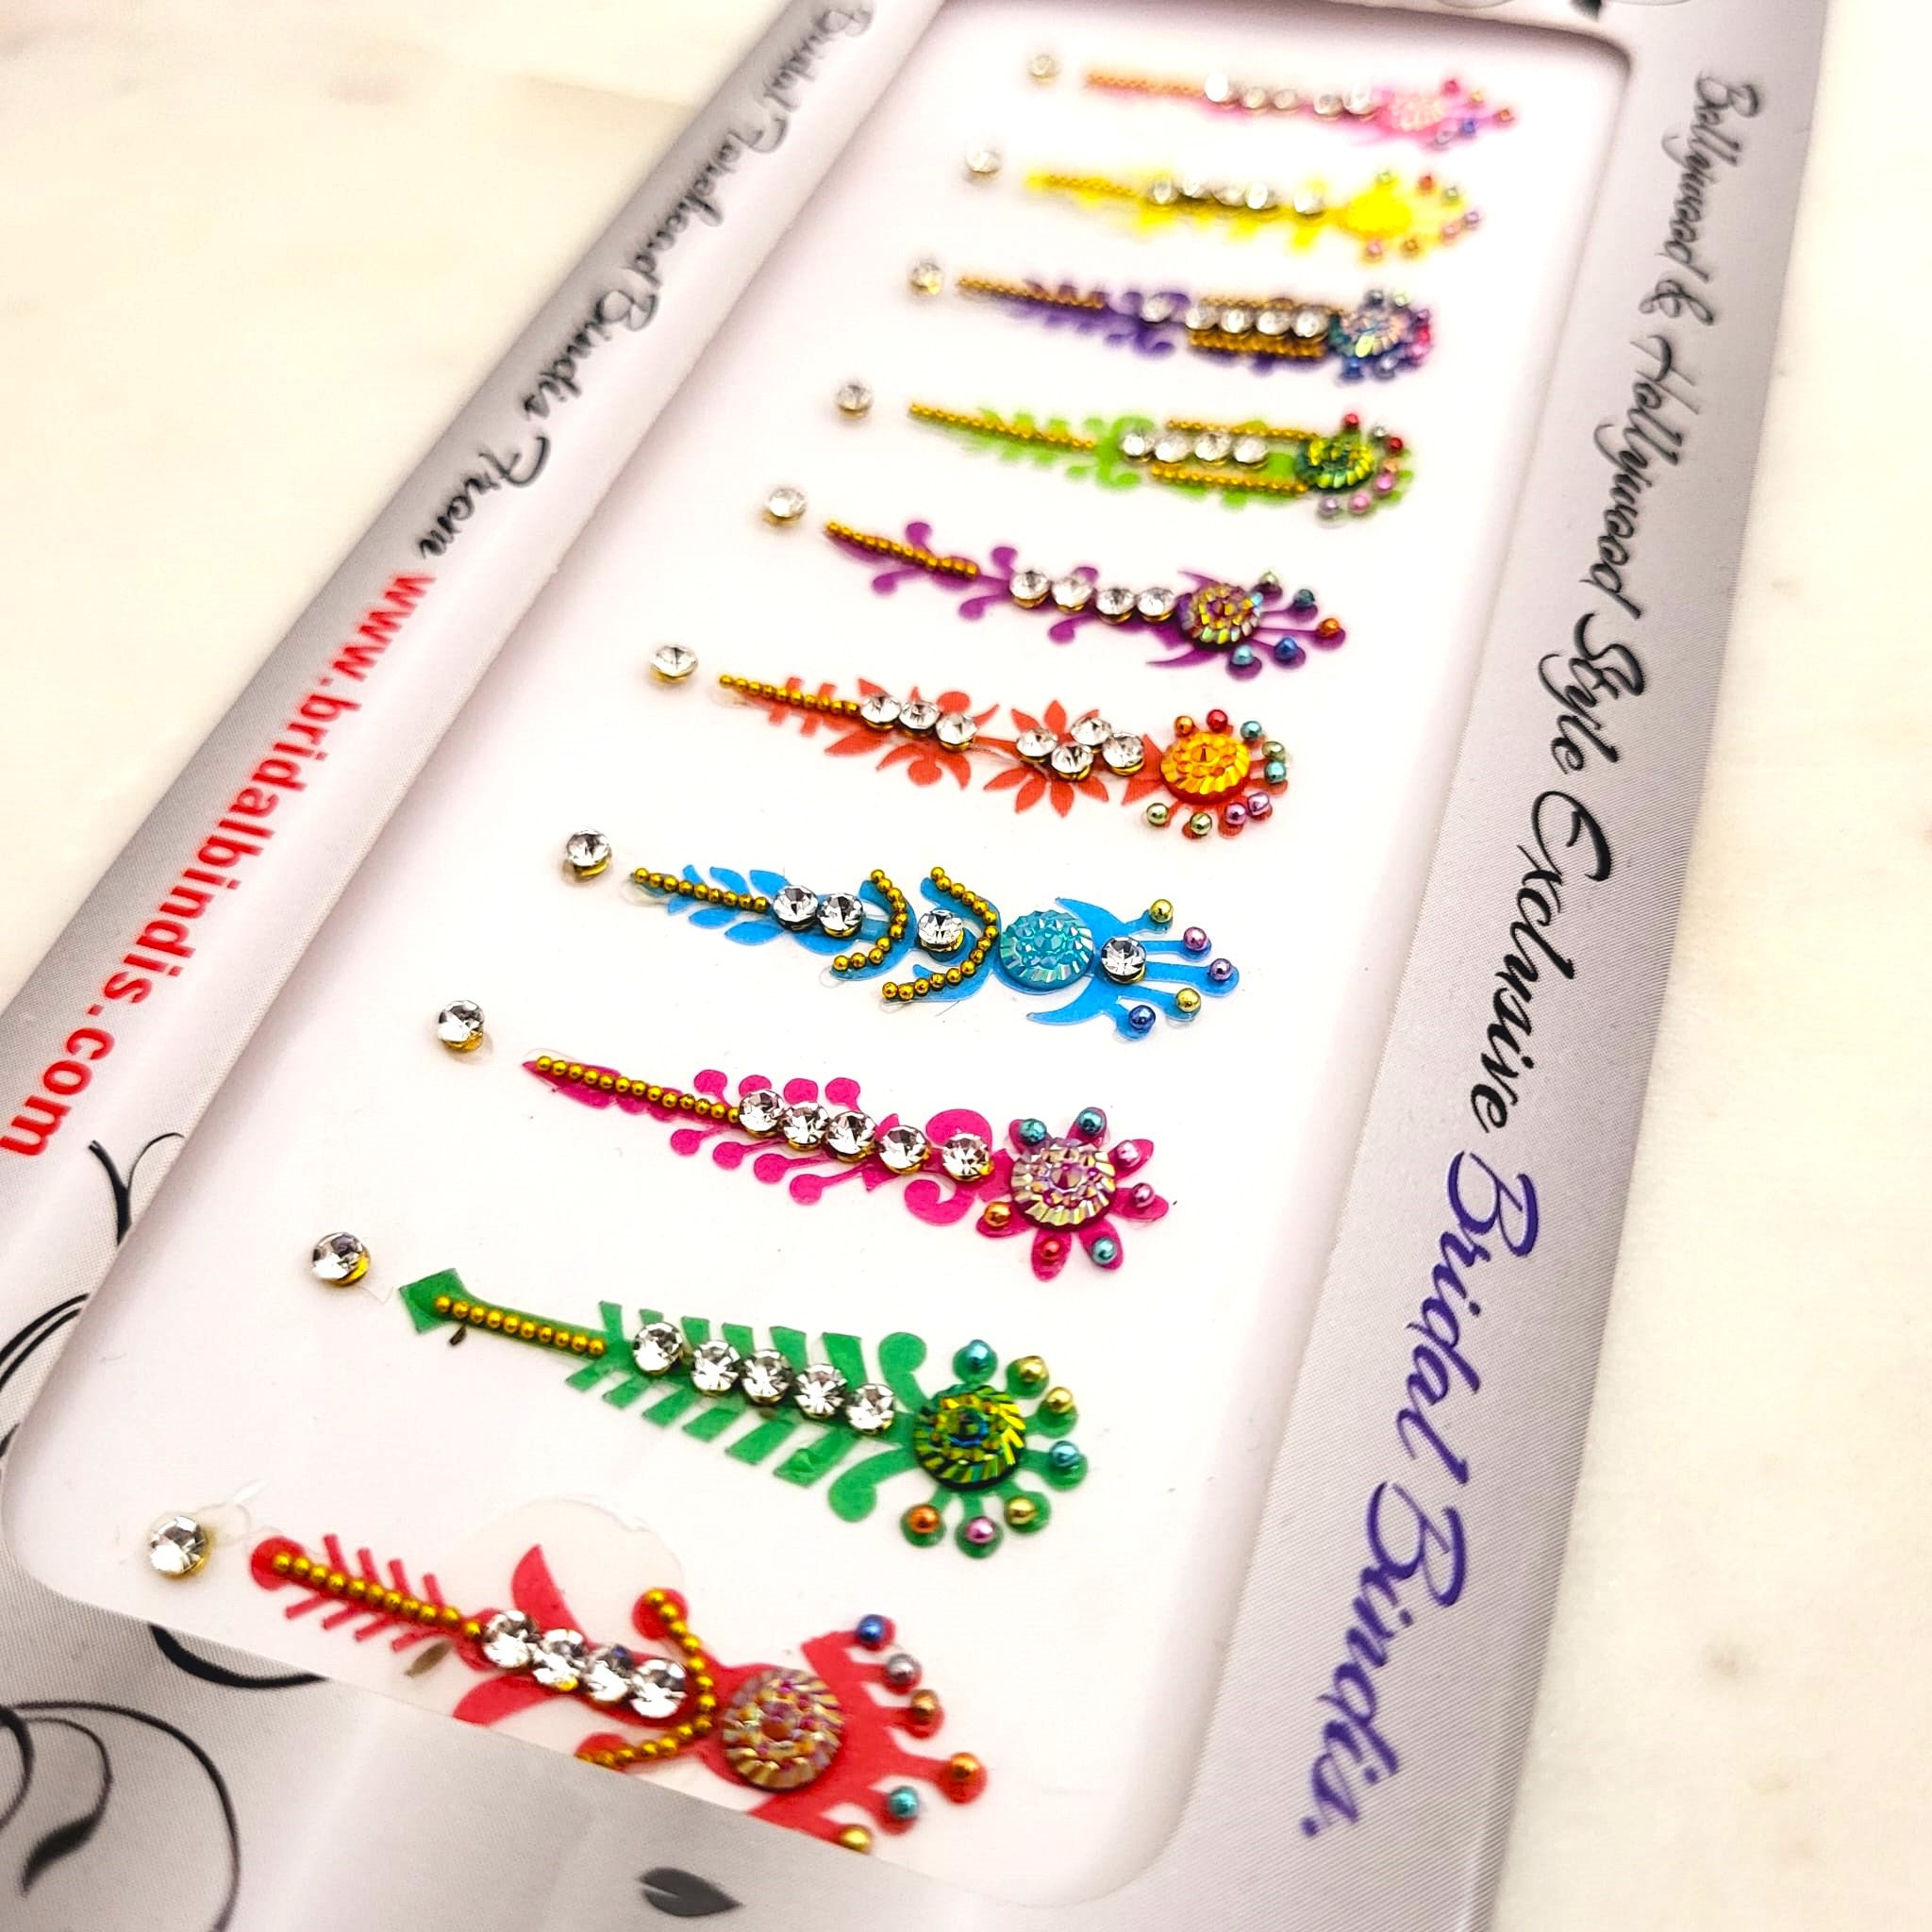 Glastonbury Bindi Set Face Gems Stick Bindi Dots Jewels Bindi Dots Bindis  Beauty Body Art Accessories Festival Birthday Gift for Her 